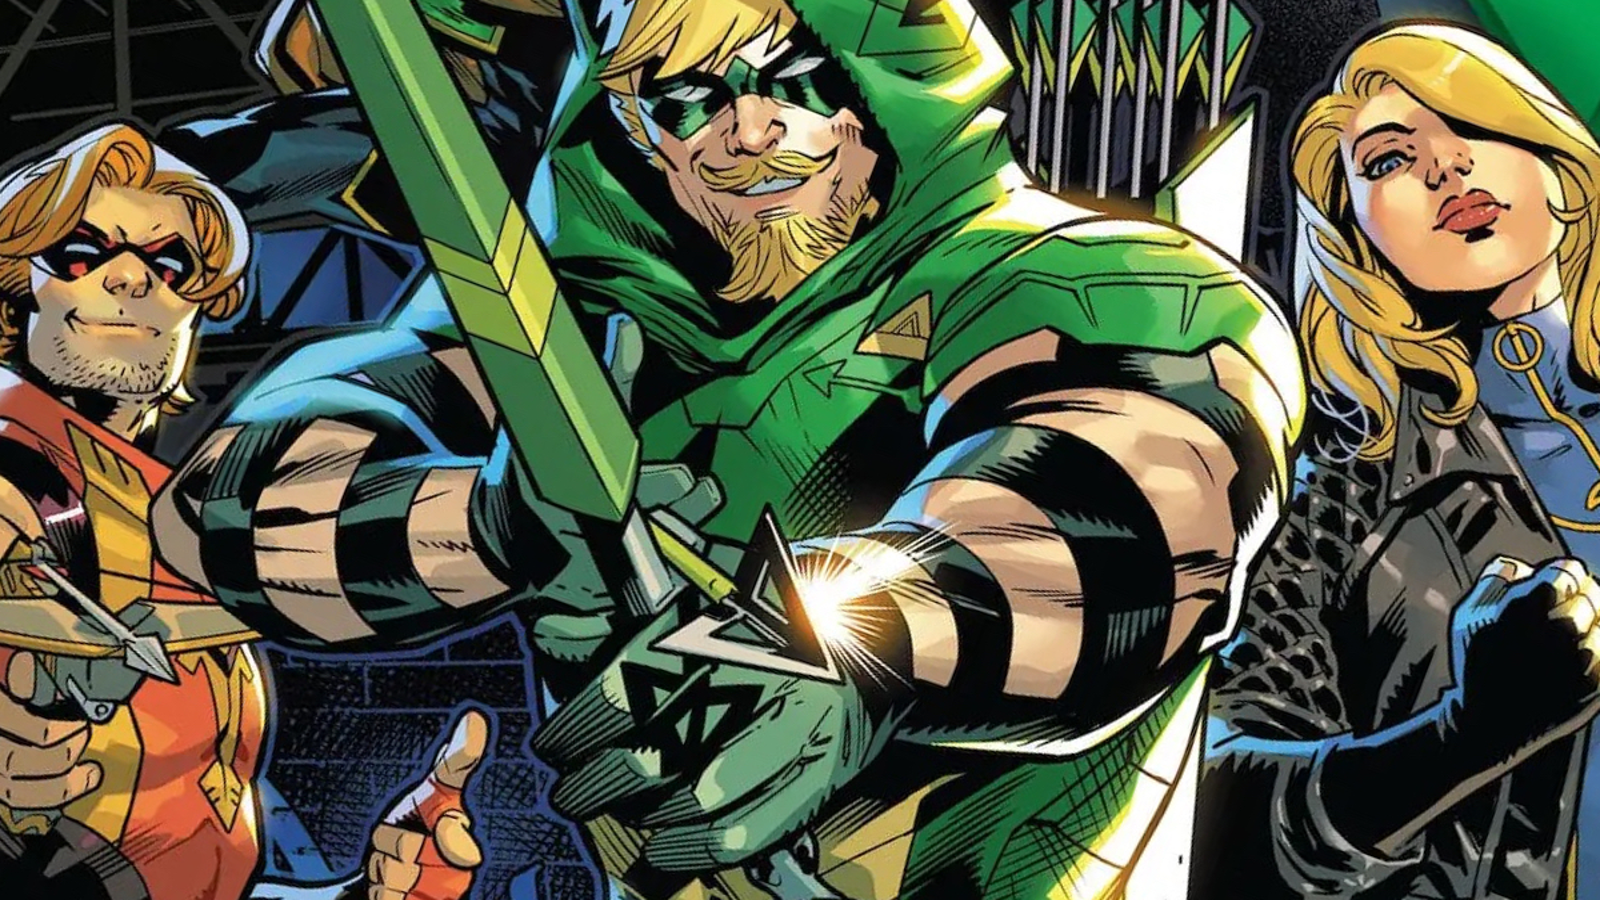 DC Histories: Oliver Queen (Green Arrow I)